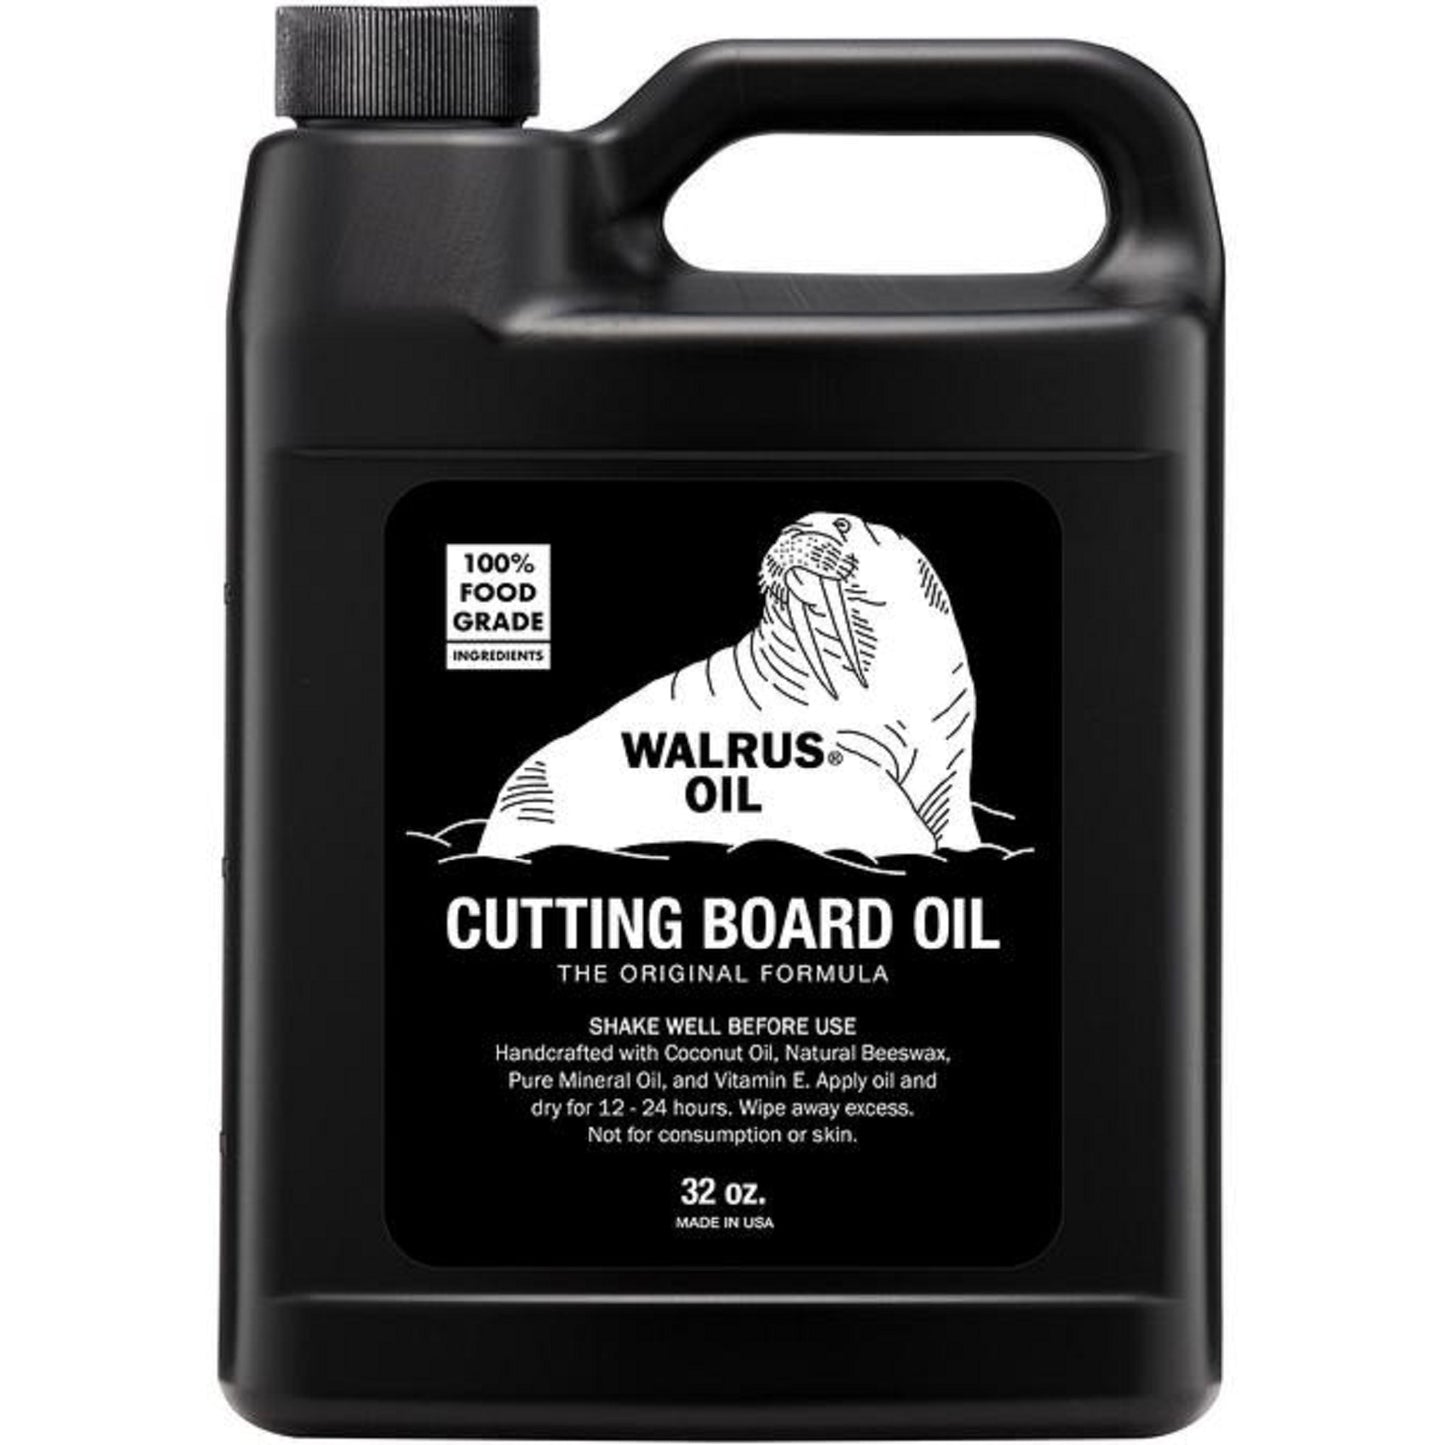 Food Safe Cutting Board Oil, Walrus Oil, Wood Wax, Charcuterie Board Oil